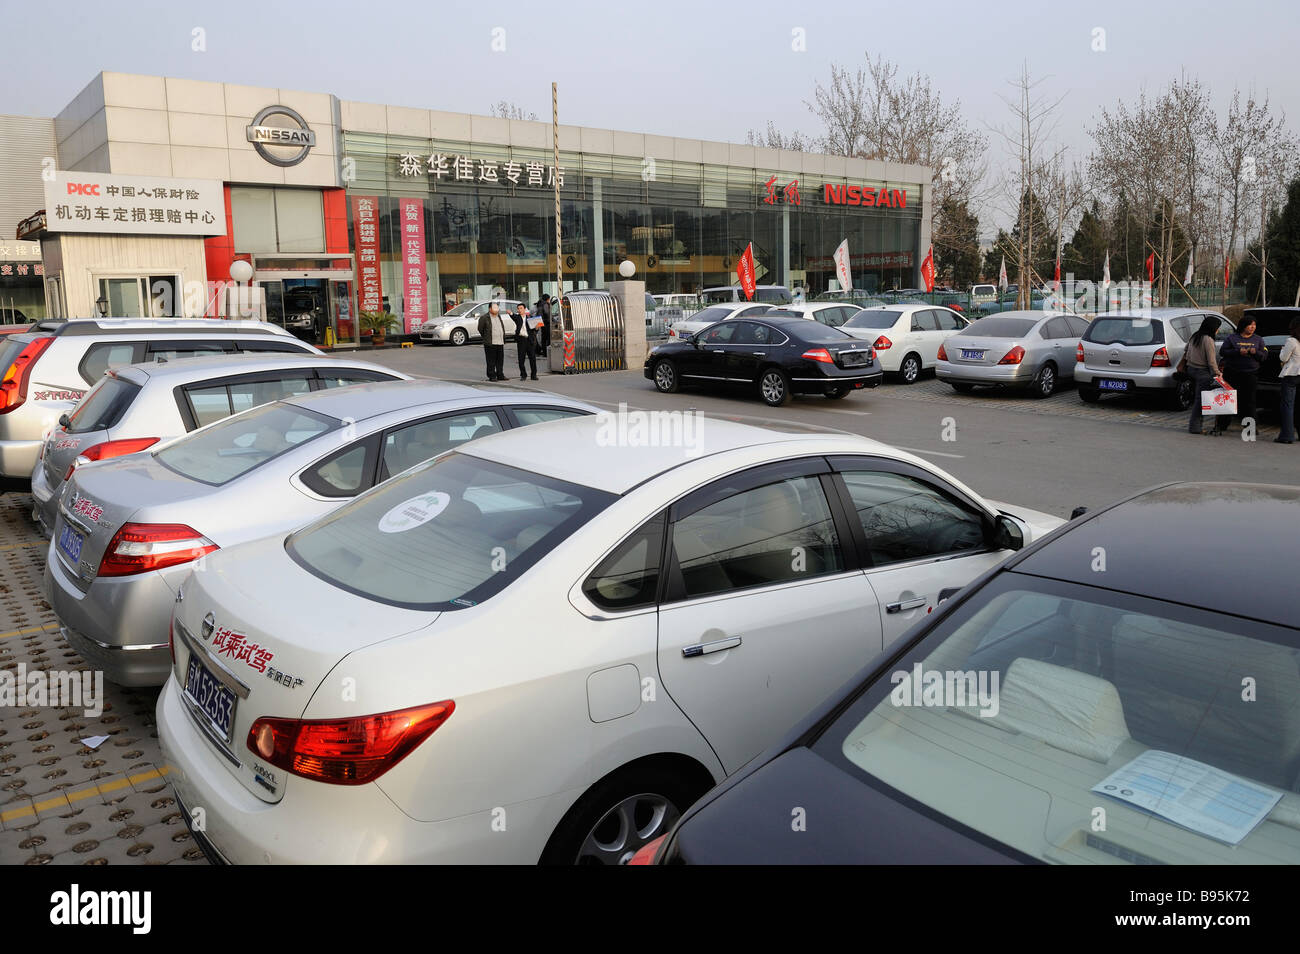 A Nissan motor dealership in Beijing, China. 16-Mar-2009 Stock Photo